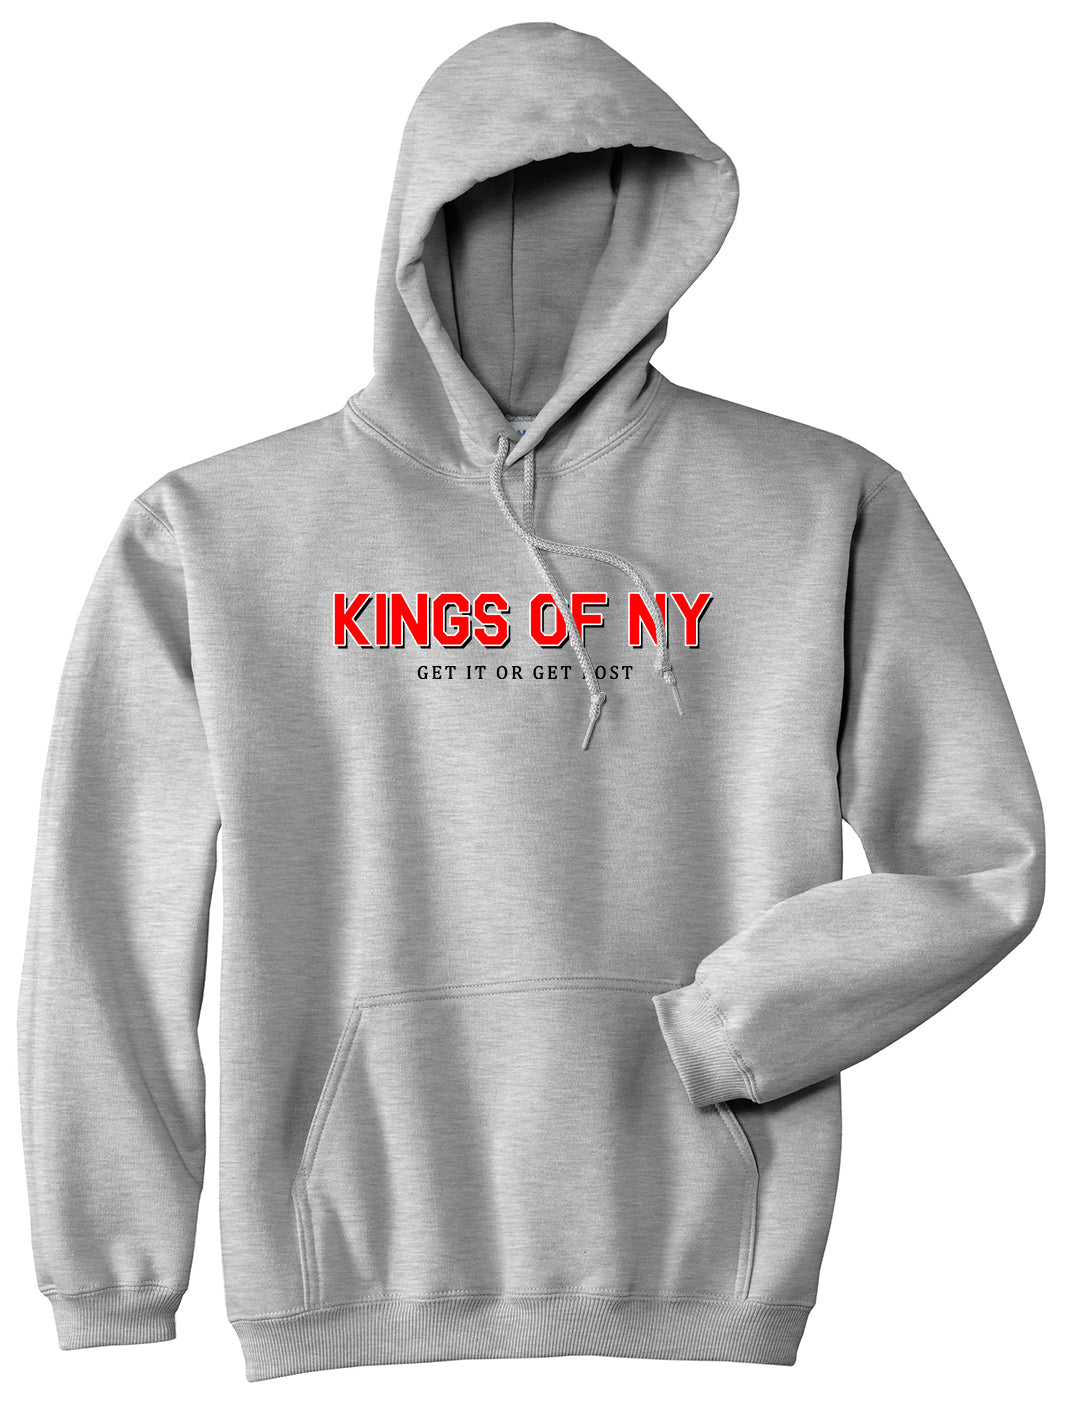 Get It Or Get Lost Mens Pullover Hoodie Grey by Kings Of NY